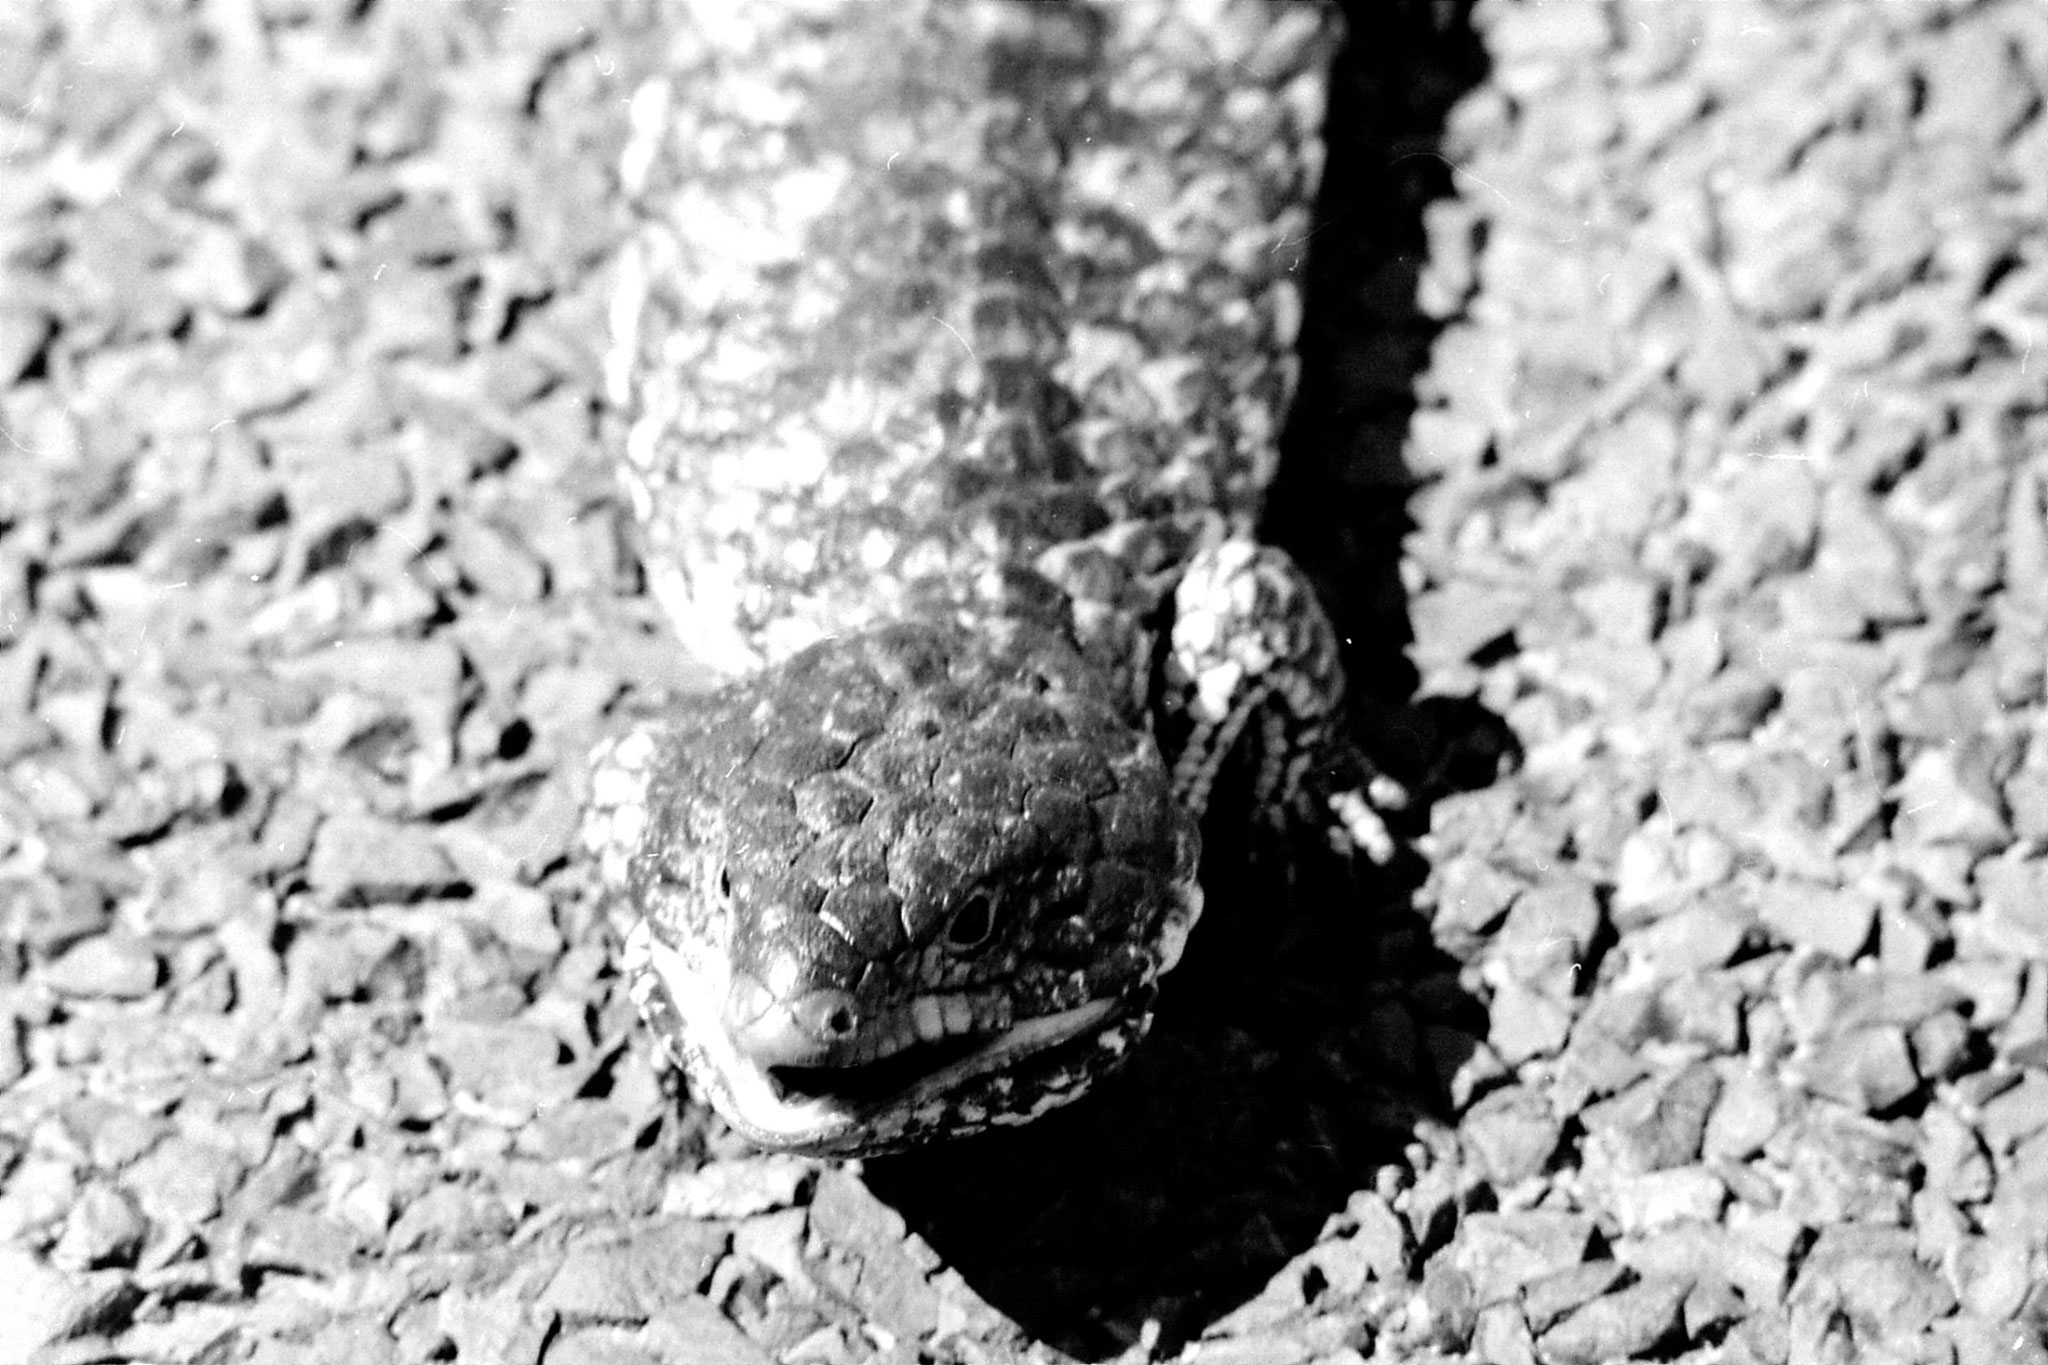 23/9/1990: 12: Little Desert stump tailed lizard